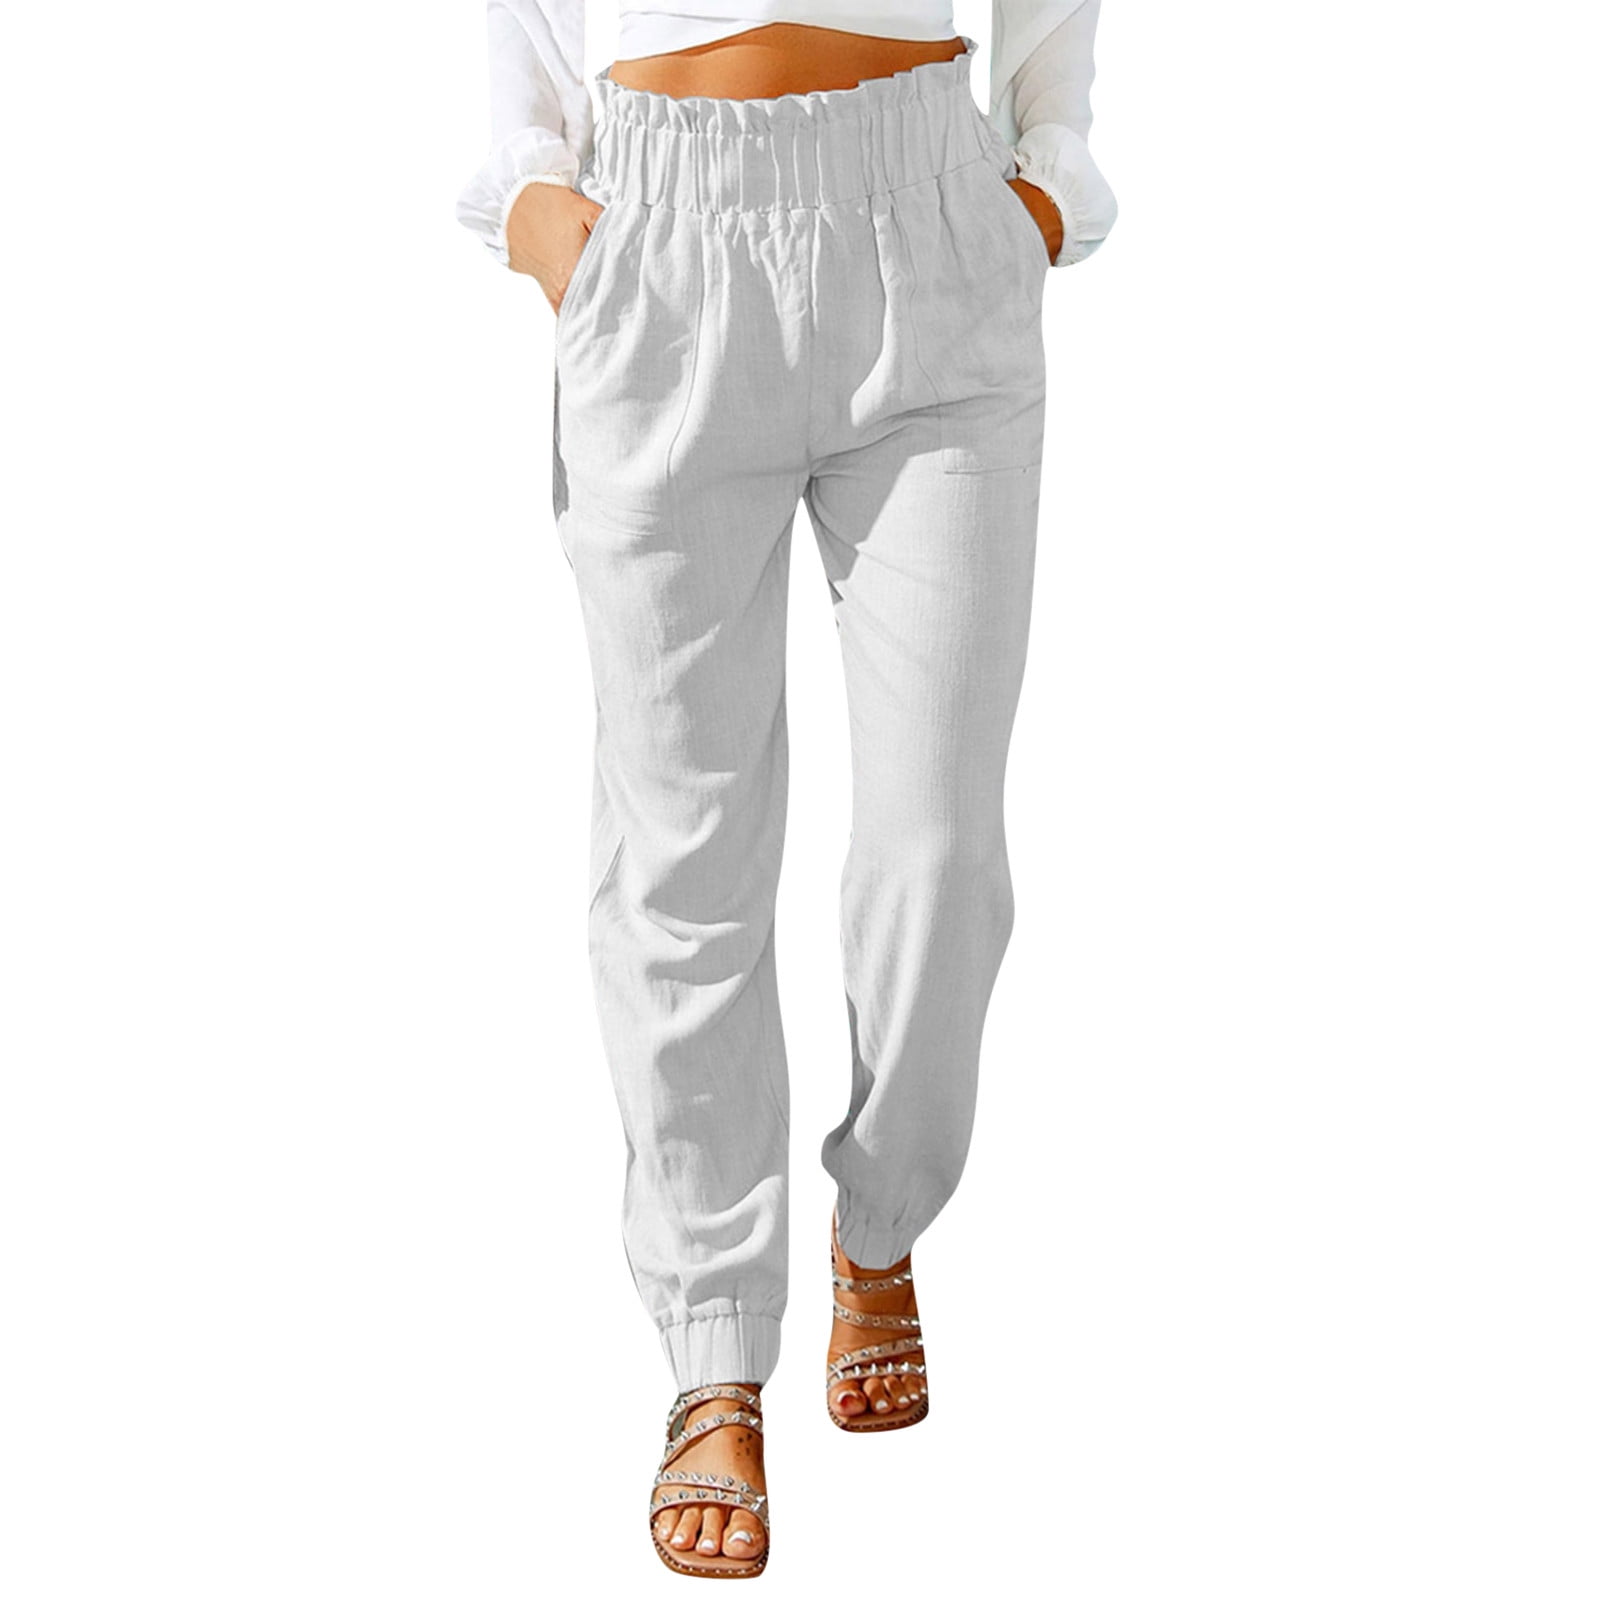 Dtydtpe Clearance Sales, Wide Leg Pants for Women White Linen Pants for  Women Tightness Trousers Pocket Casual Plus Size High Waist Pants Cargo  Pants